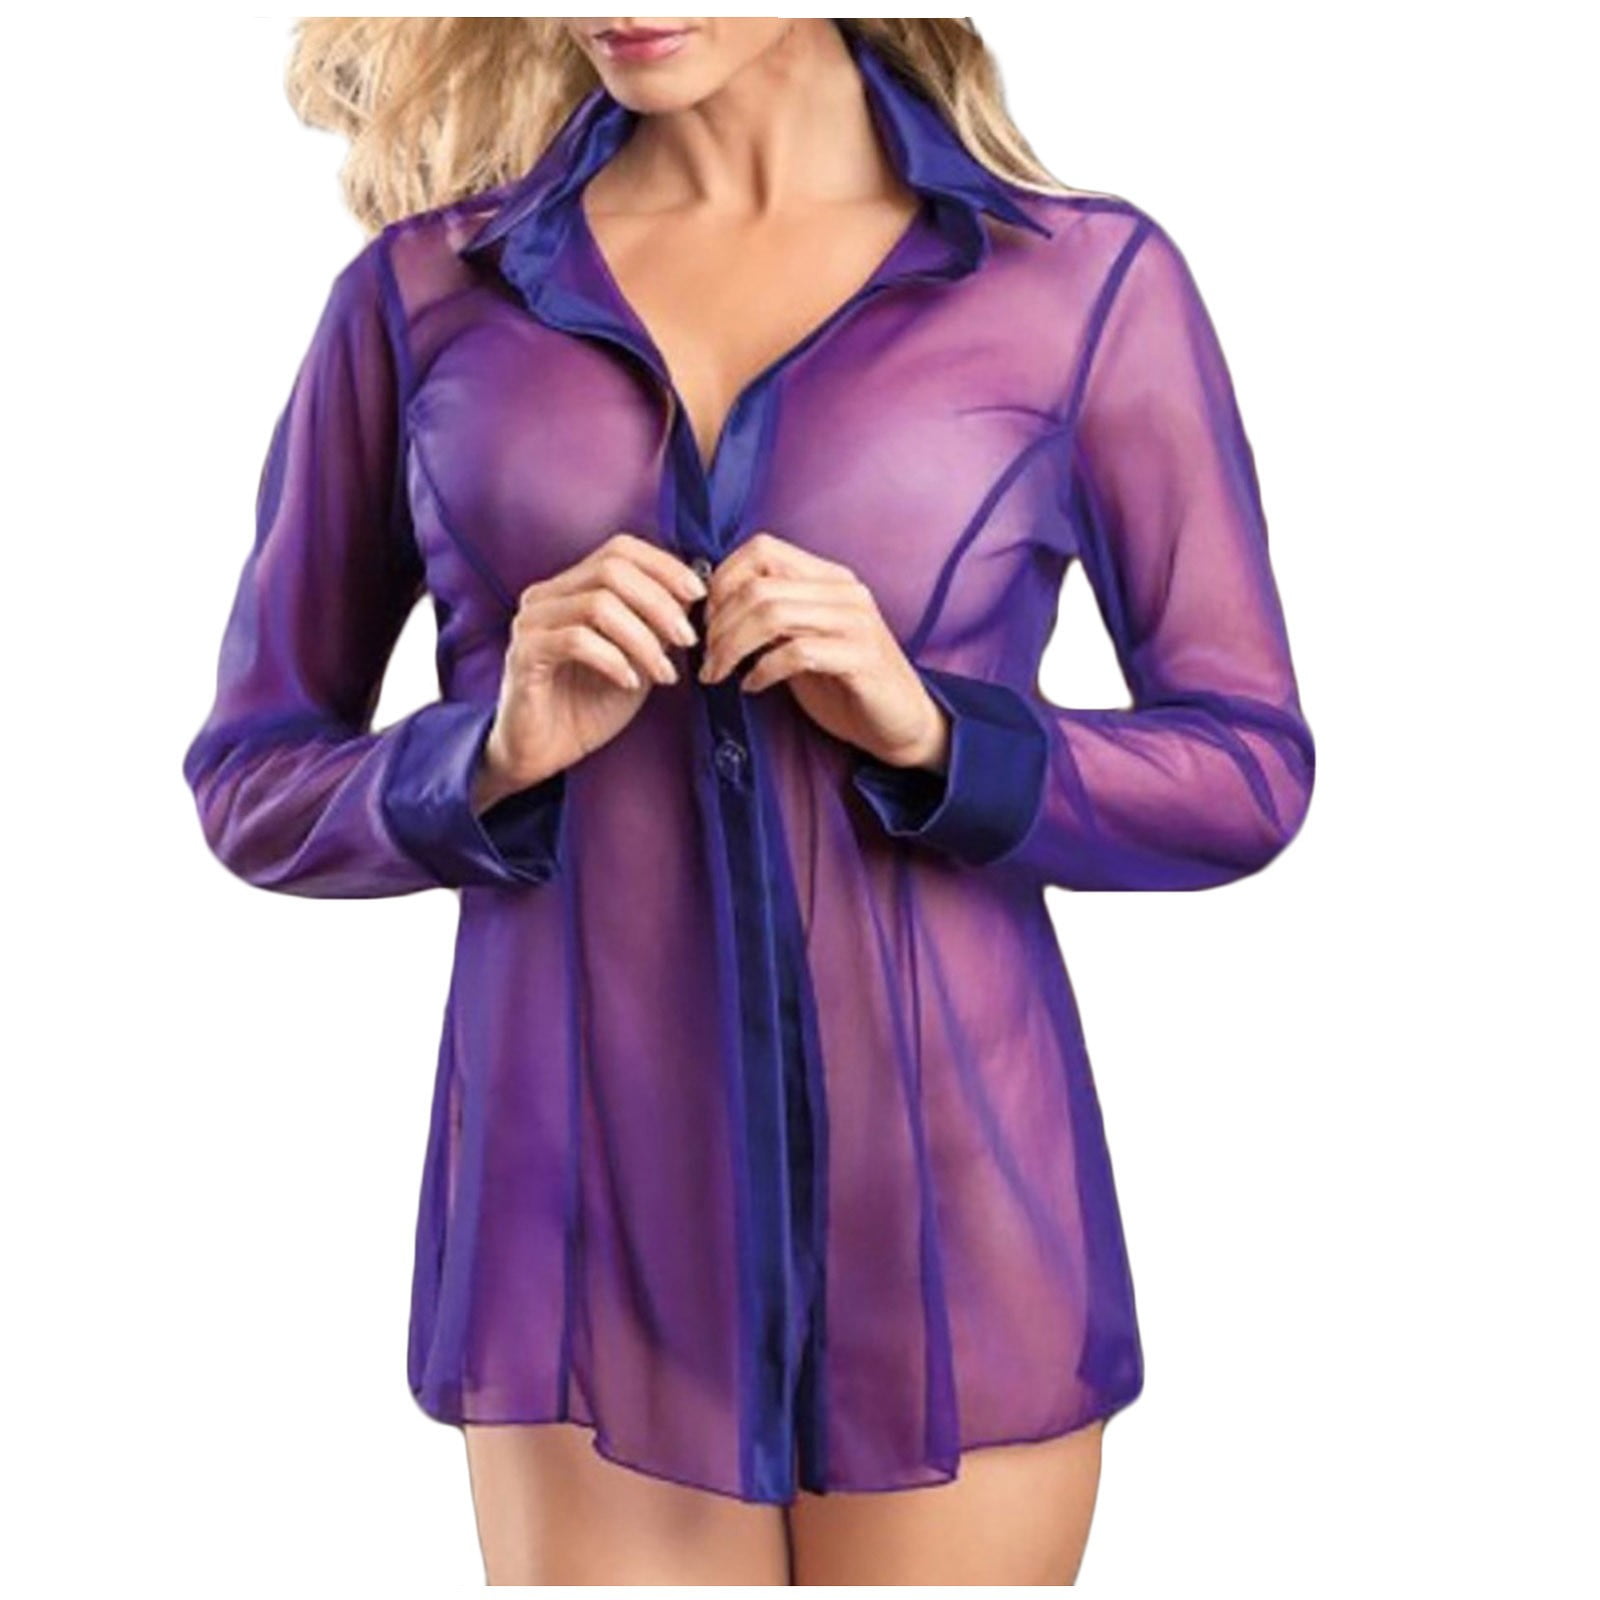 See Through Nightshirts for Women, Babydoll Lingerie Button Down Nightgown,  Women Sheer Mesh Sleep Robe Shirt 